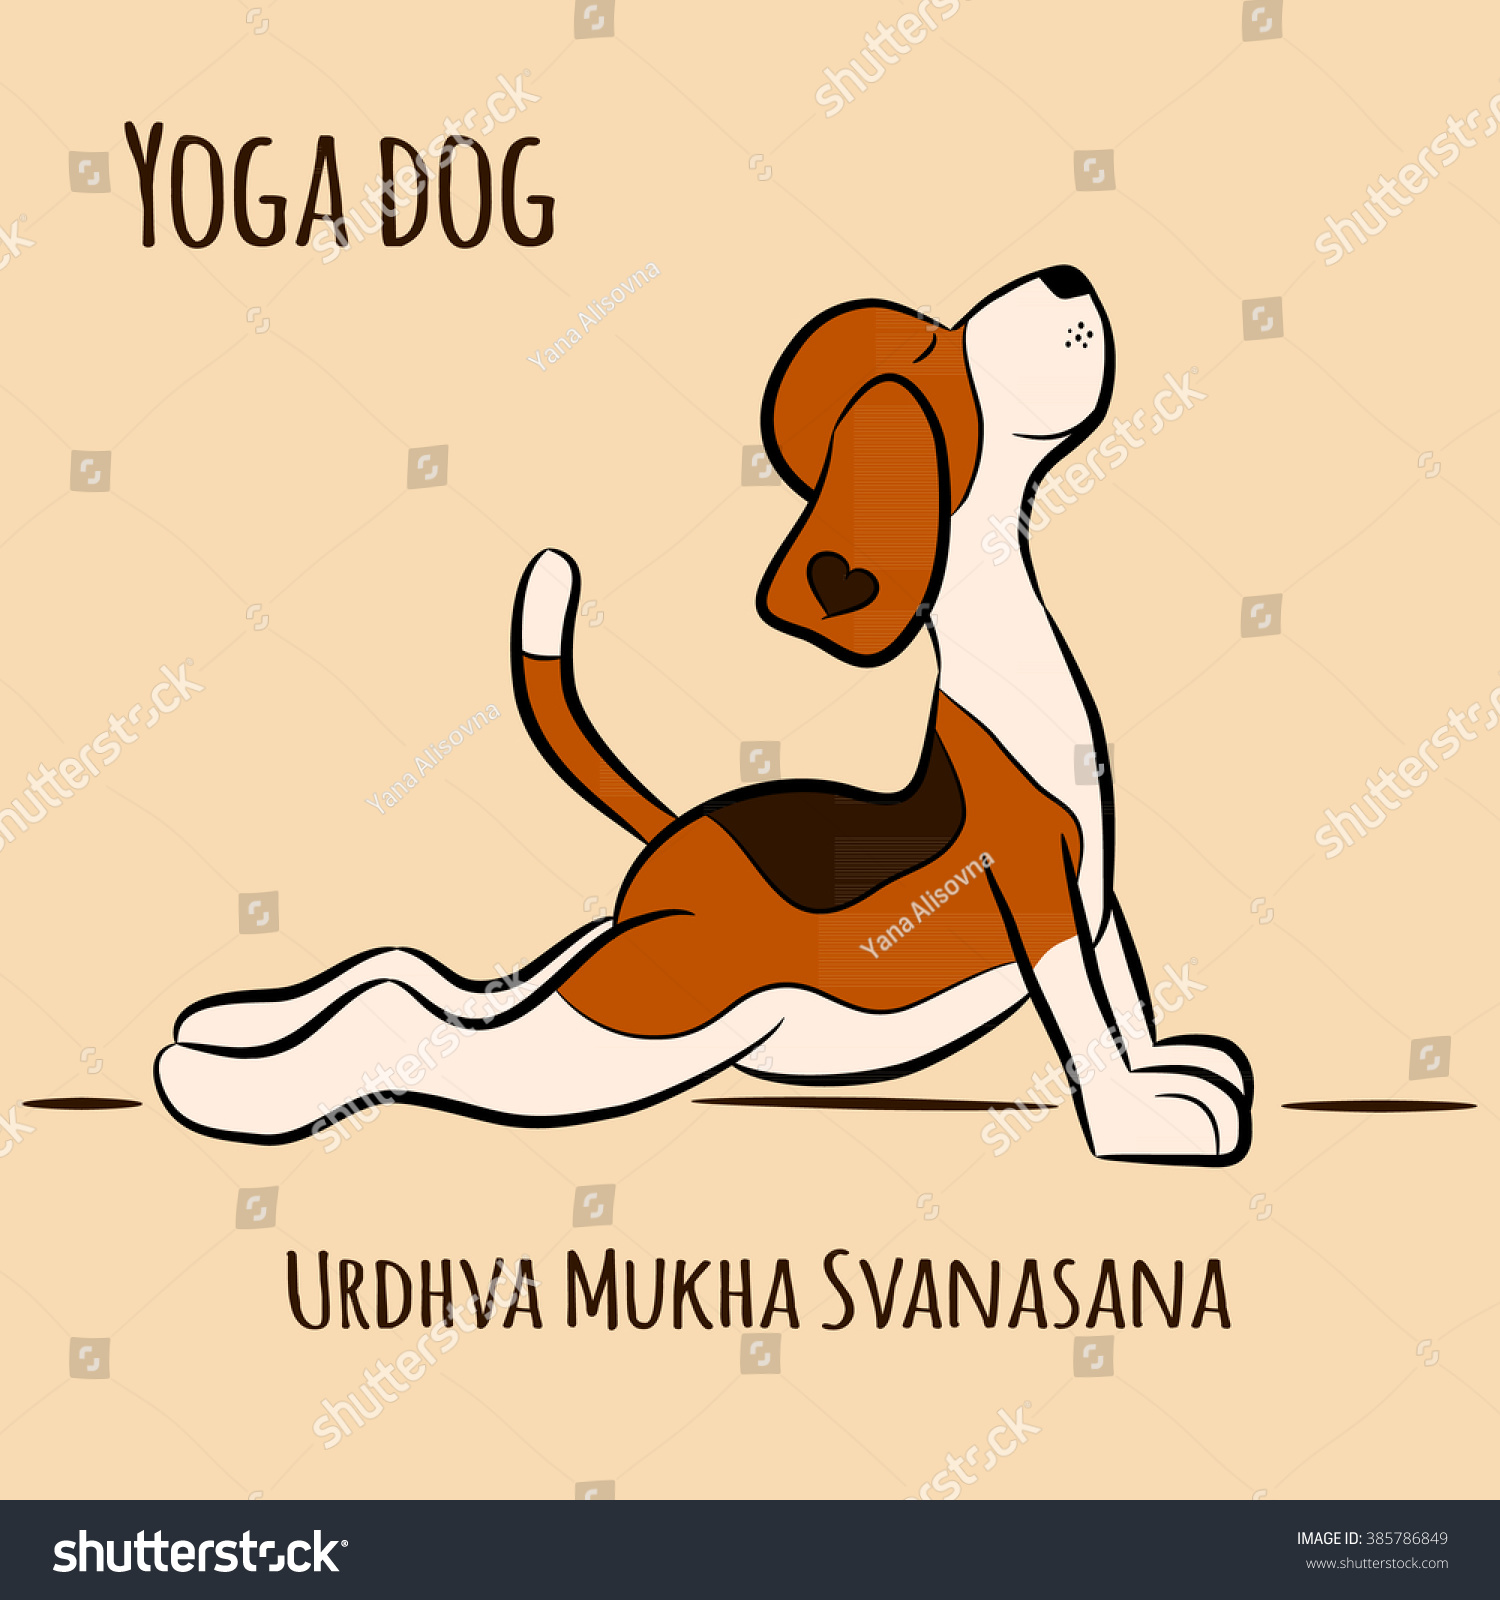 yoga dog clipart - photo #25